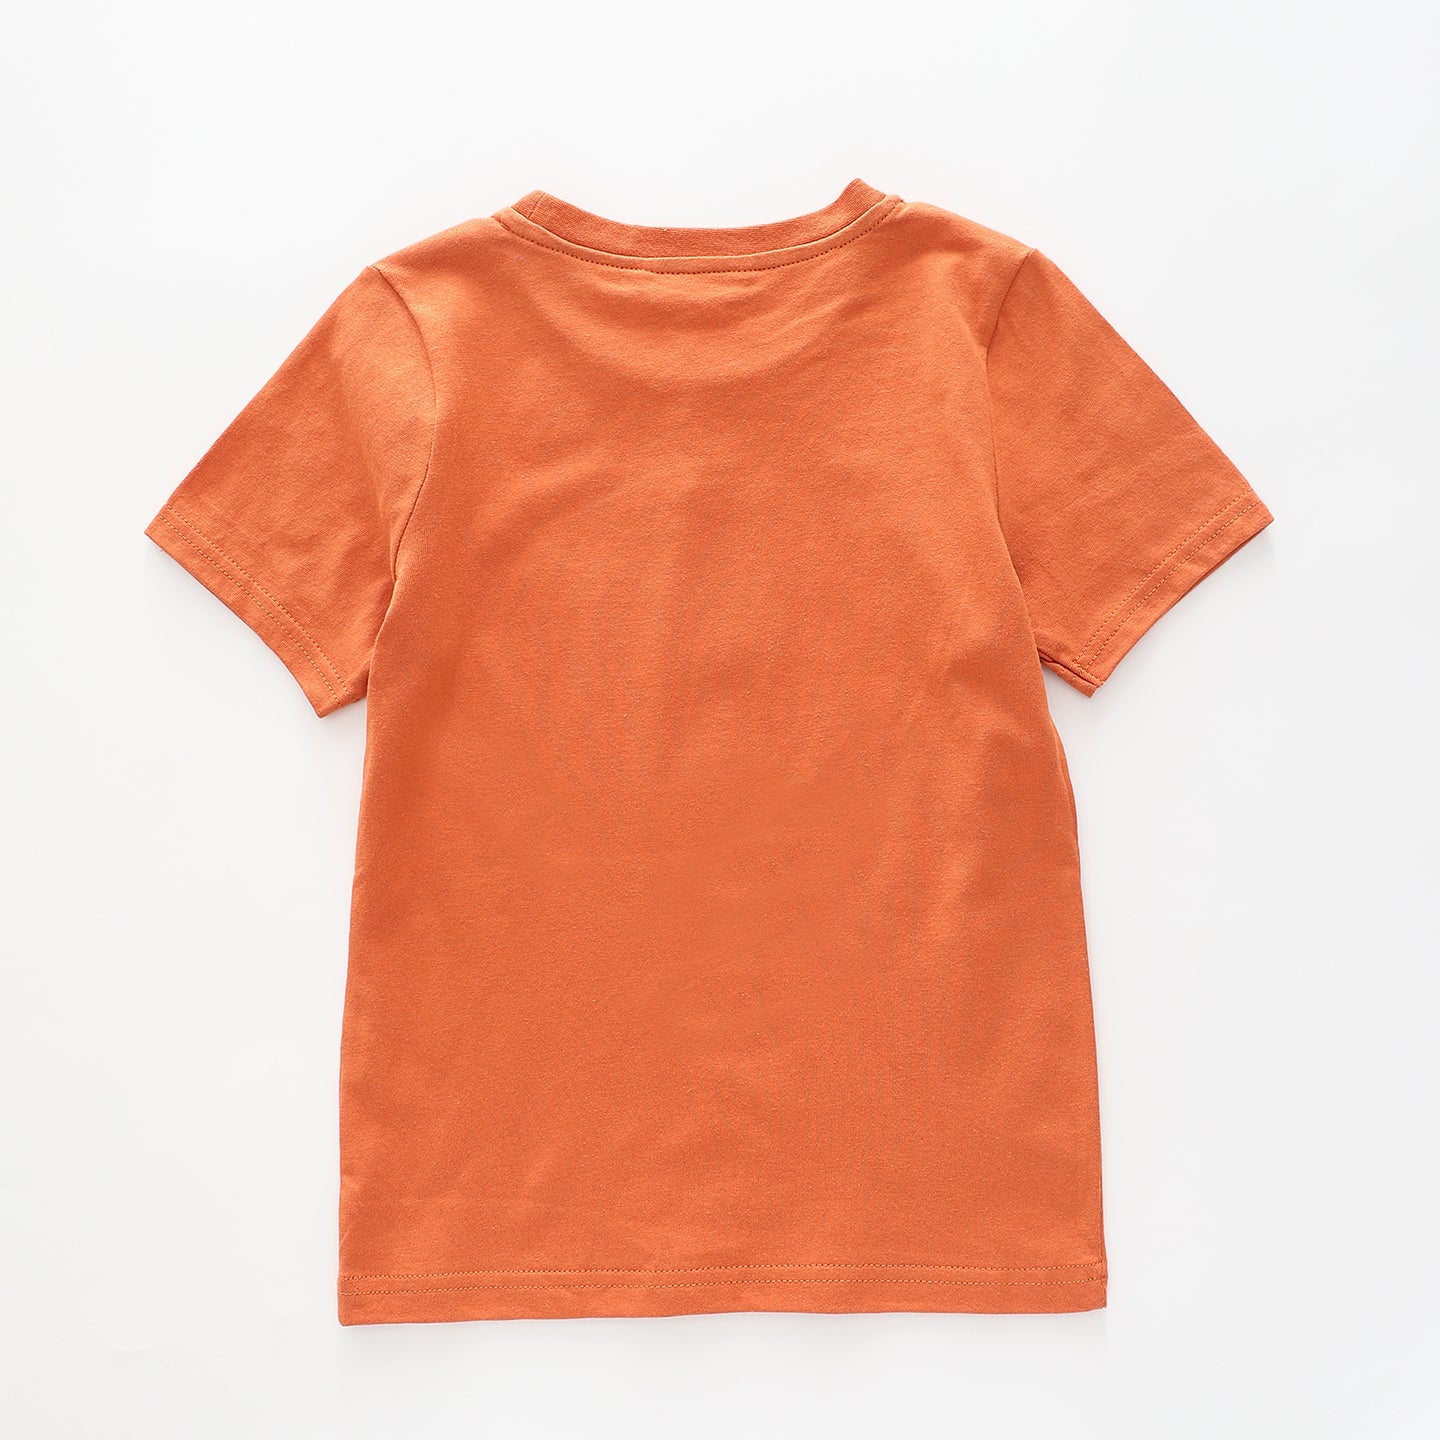 Unisex Orange T-shirt With Sequined Leopard Print